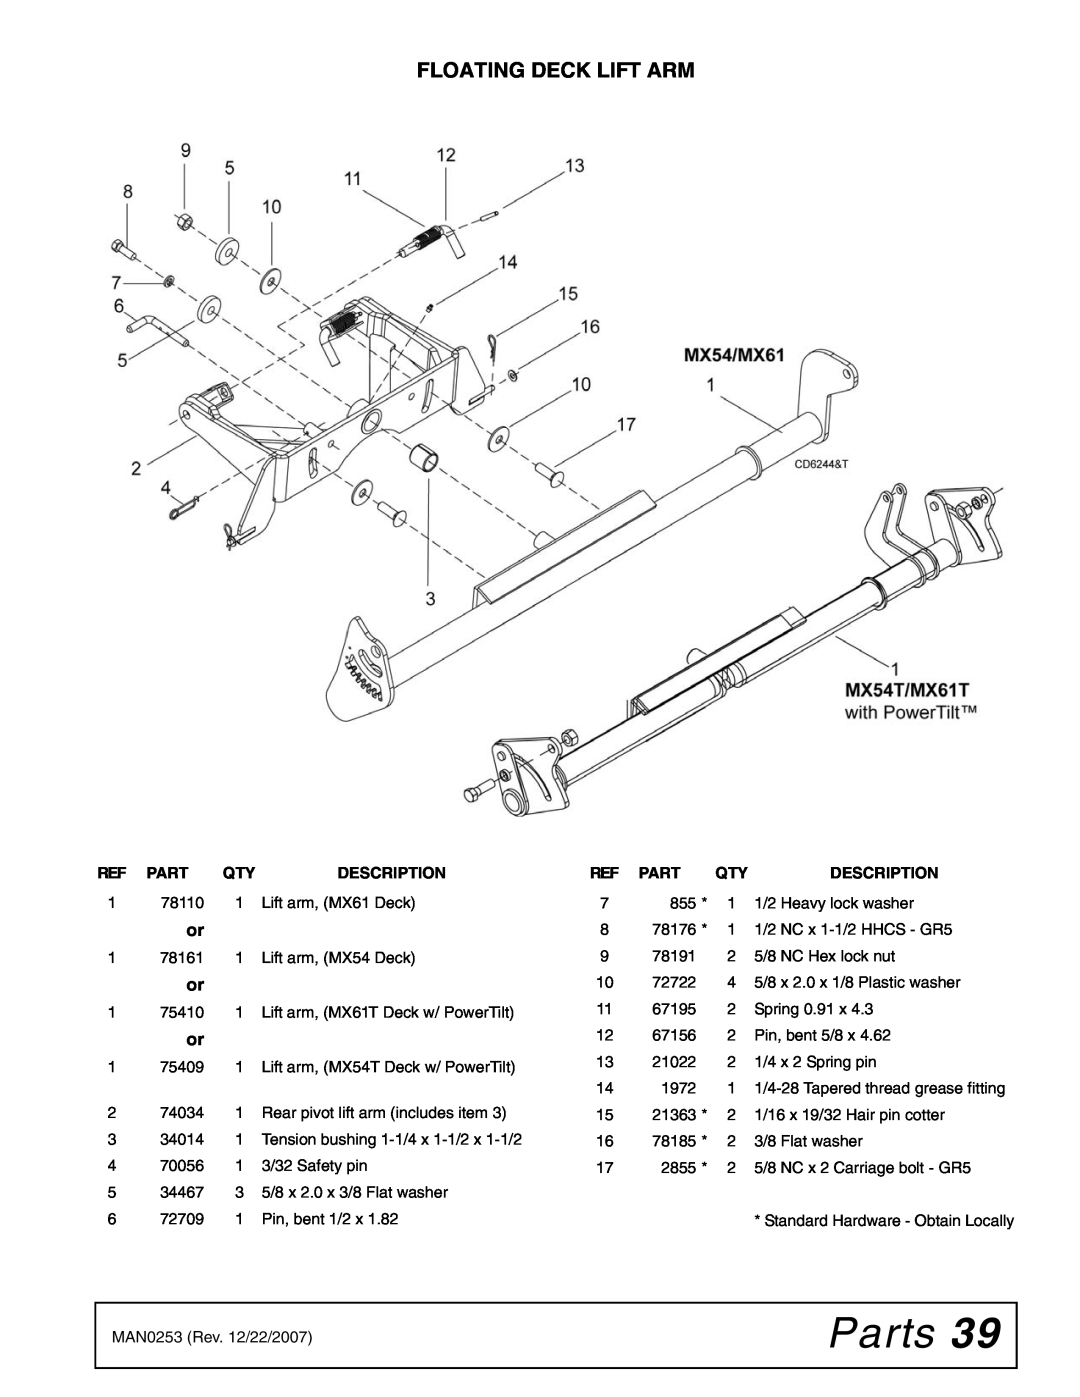 Woods Equipment MX54T, MX61T manual Floating Deck Lift Arm, Parts, Tension bushing 1-1/4 x 1-1/2 x 1-1/2 